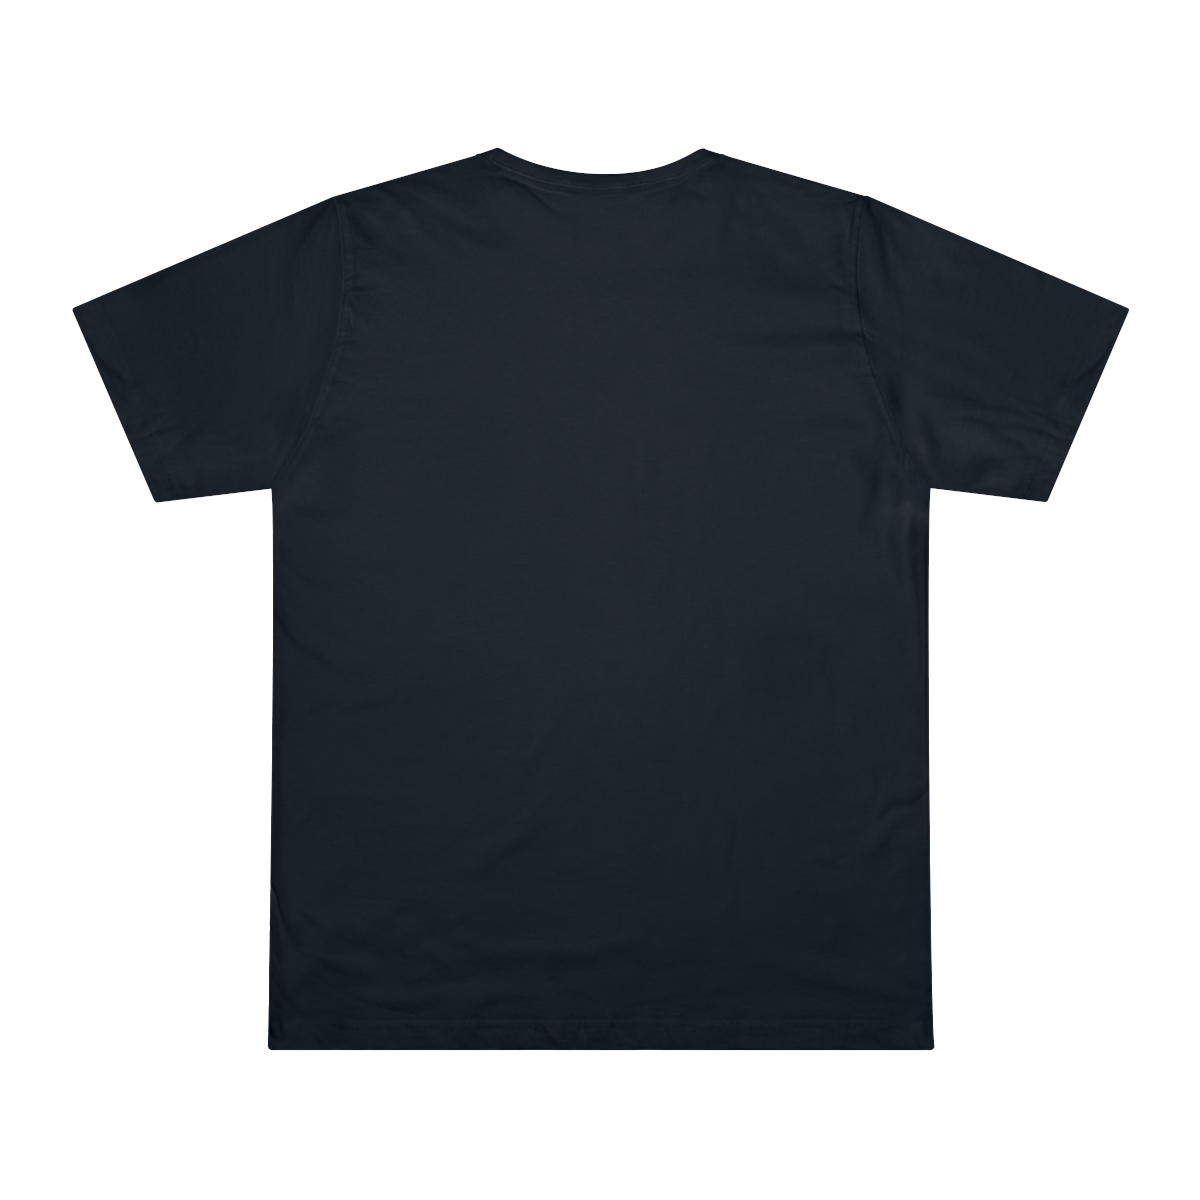 Unisex Deluxe T-shirt - Lume Logo w/ Moth  product thumbnail image